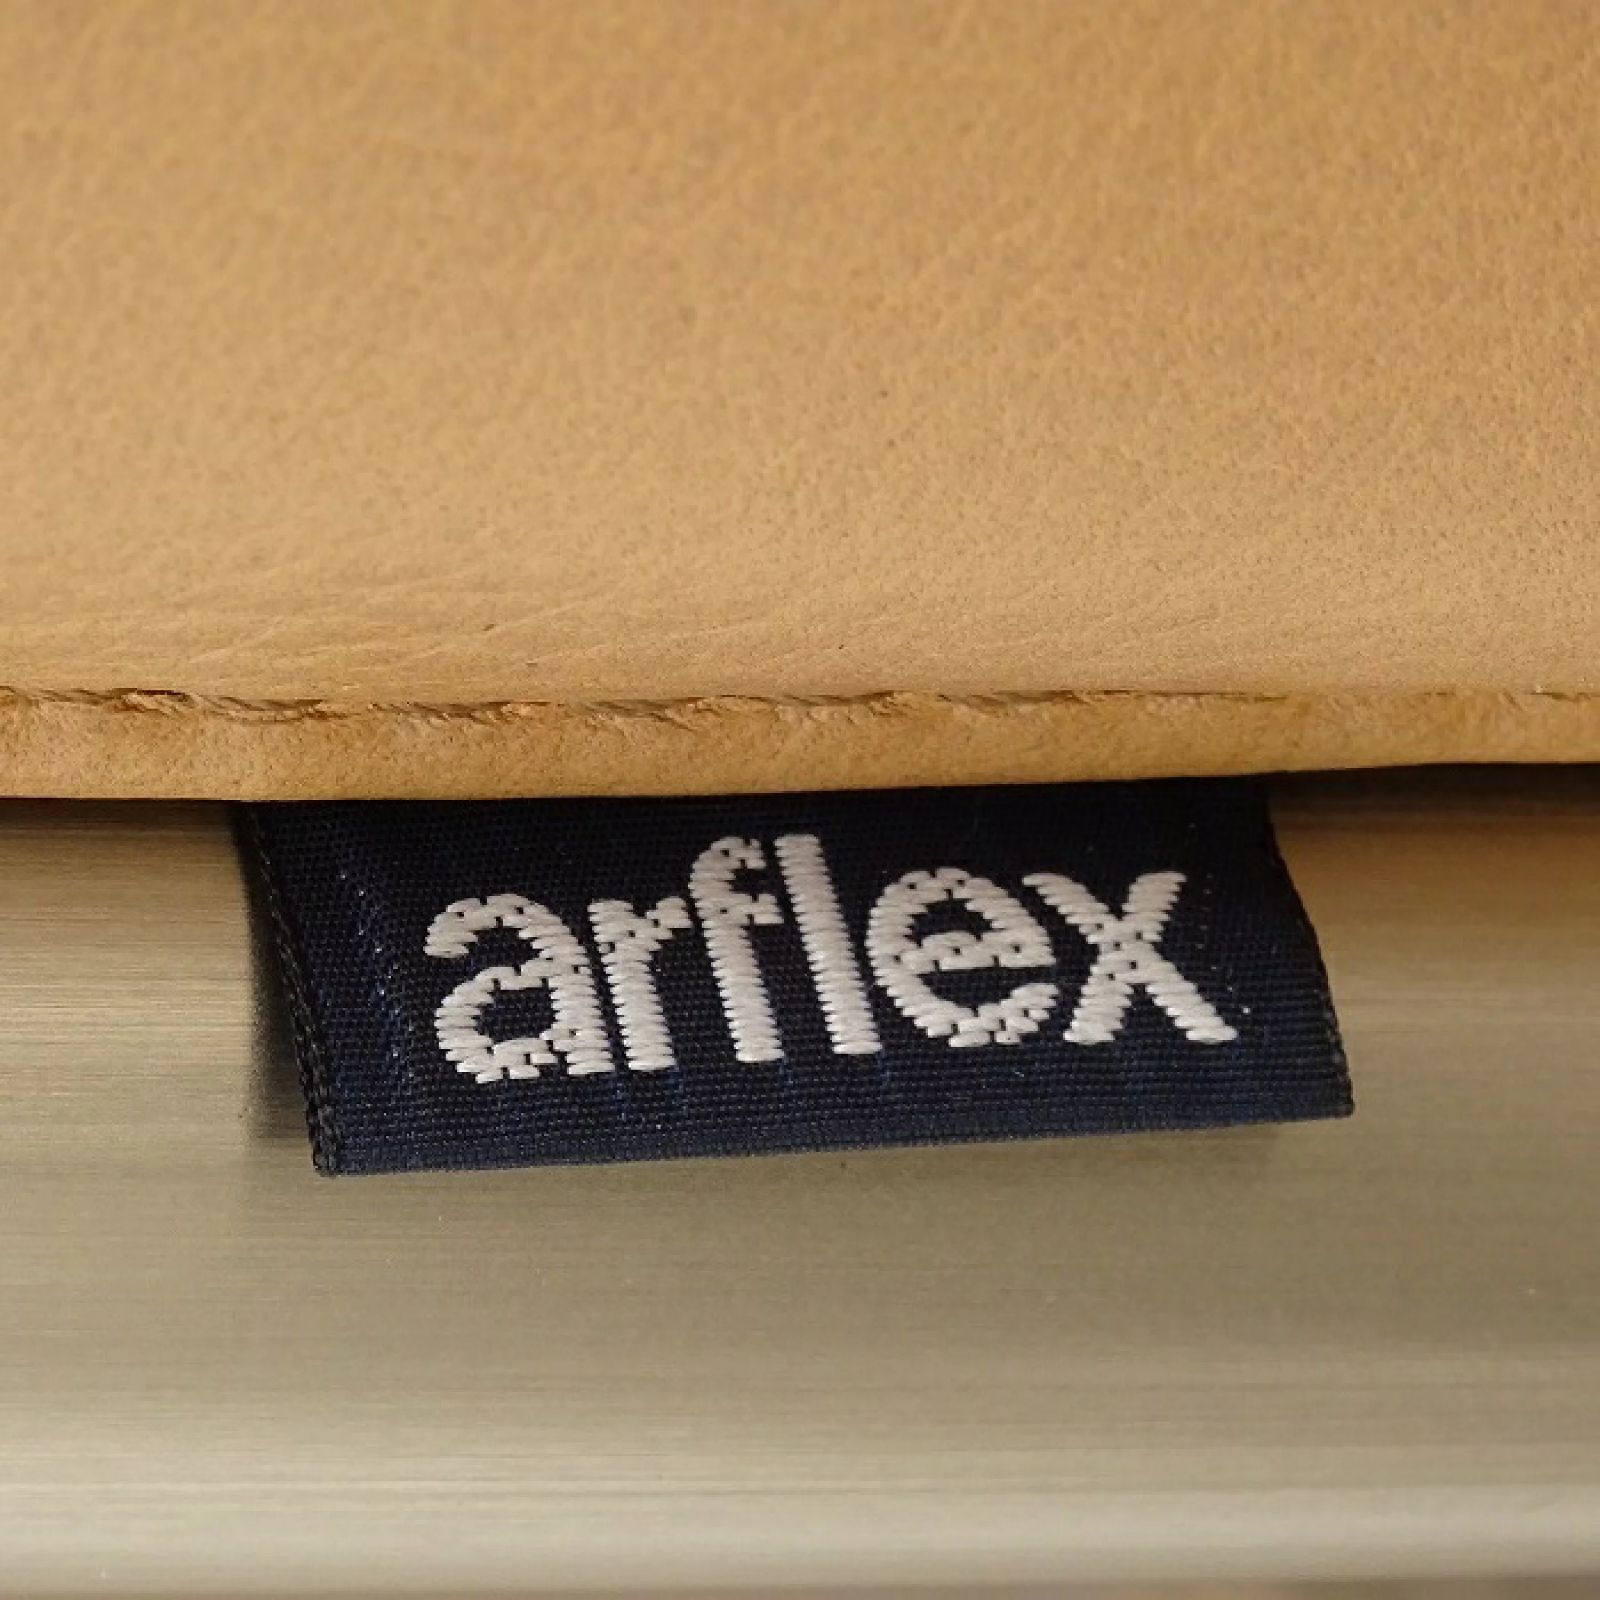 ◾︎SELUNO◾︎ 【展示美品】arflex(アルフレックス) BOURG / ブール カウチソファ / 本革 177万 c575 - メルカリ